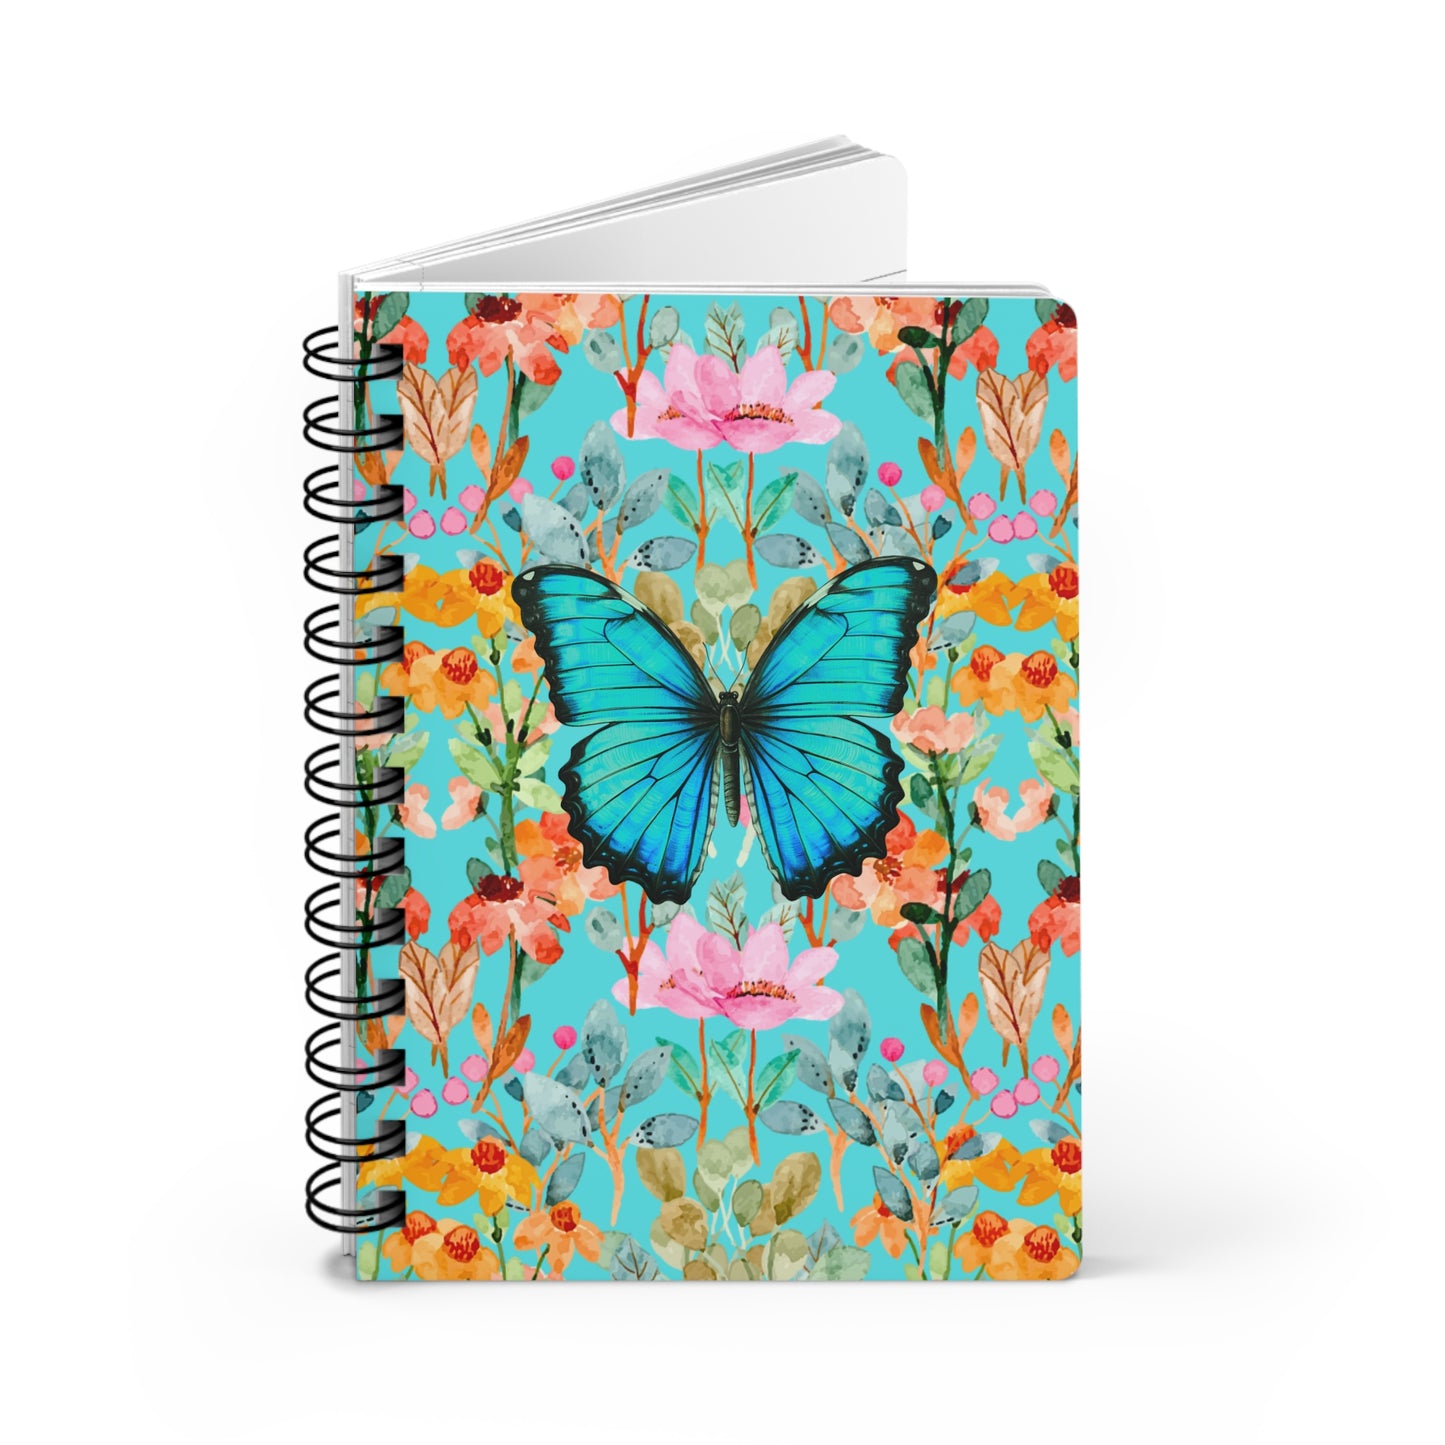 Wildflower Fields Turquoise Writing Sketch Inspiration Spiral Bound Journal